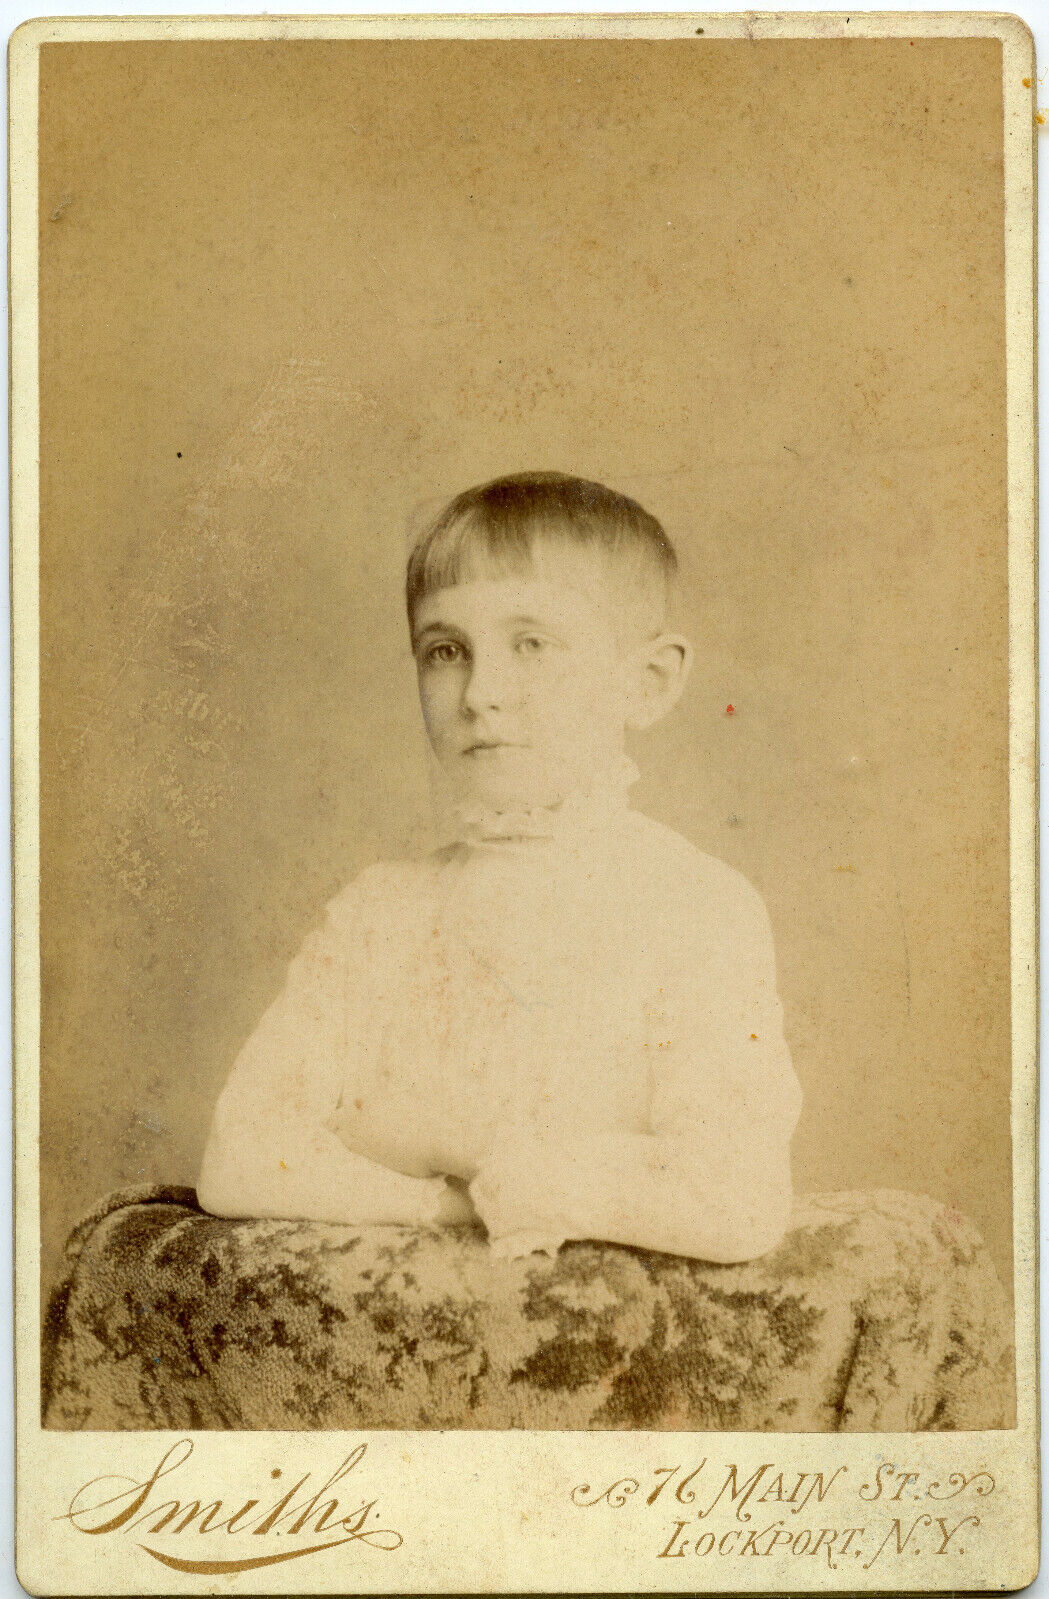 YOUNG BOY Vintage Original Cabinet Photo Ruffled Collar SMITHS Lockport New York